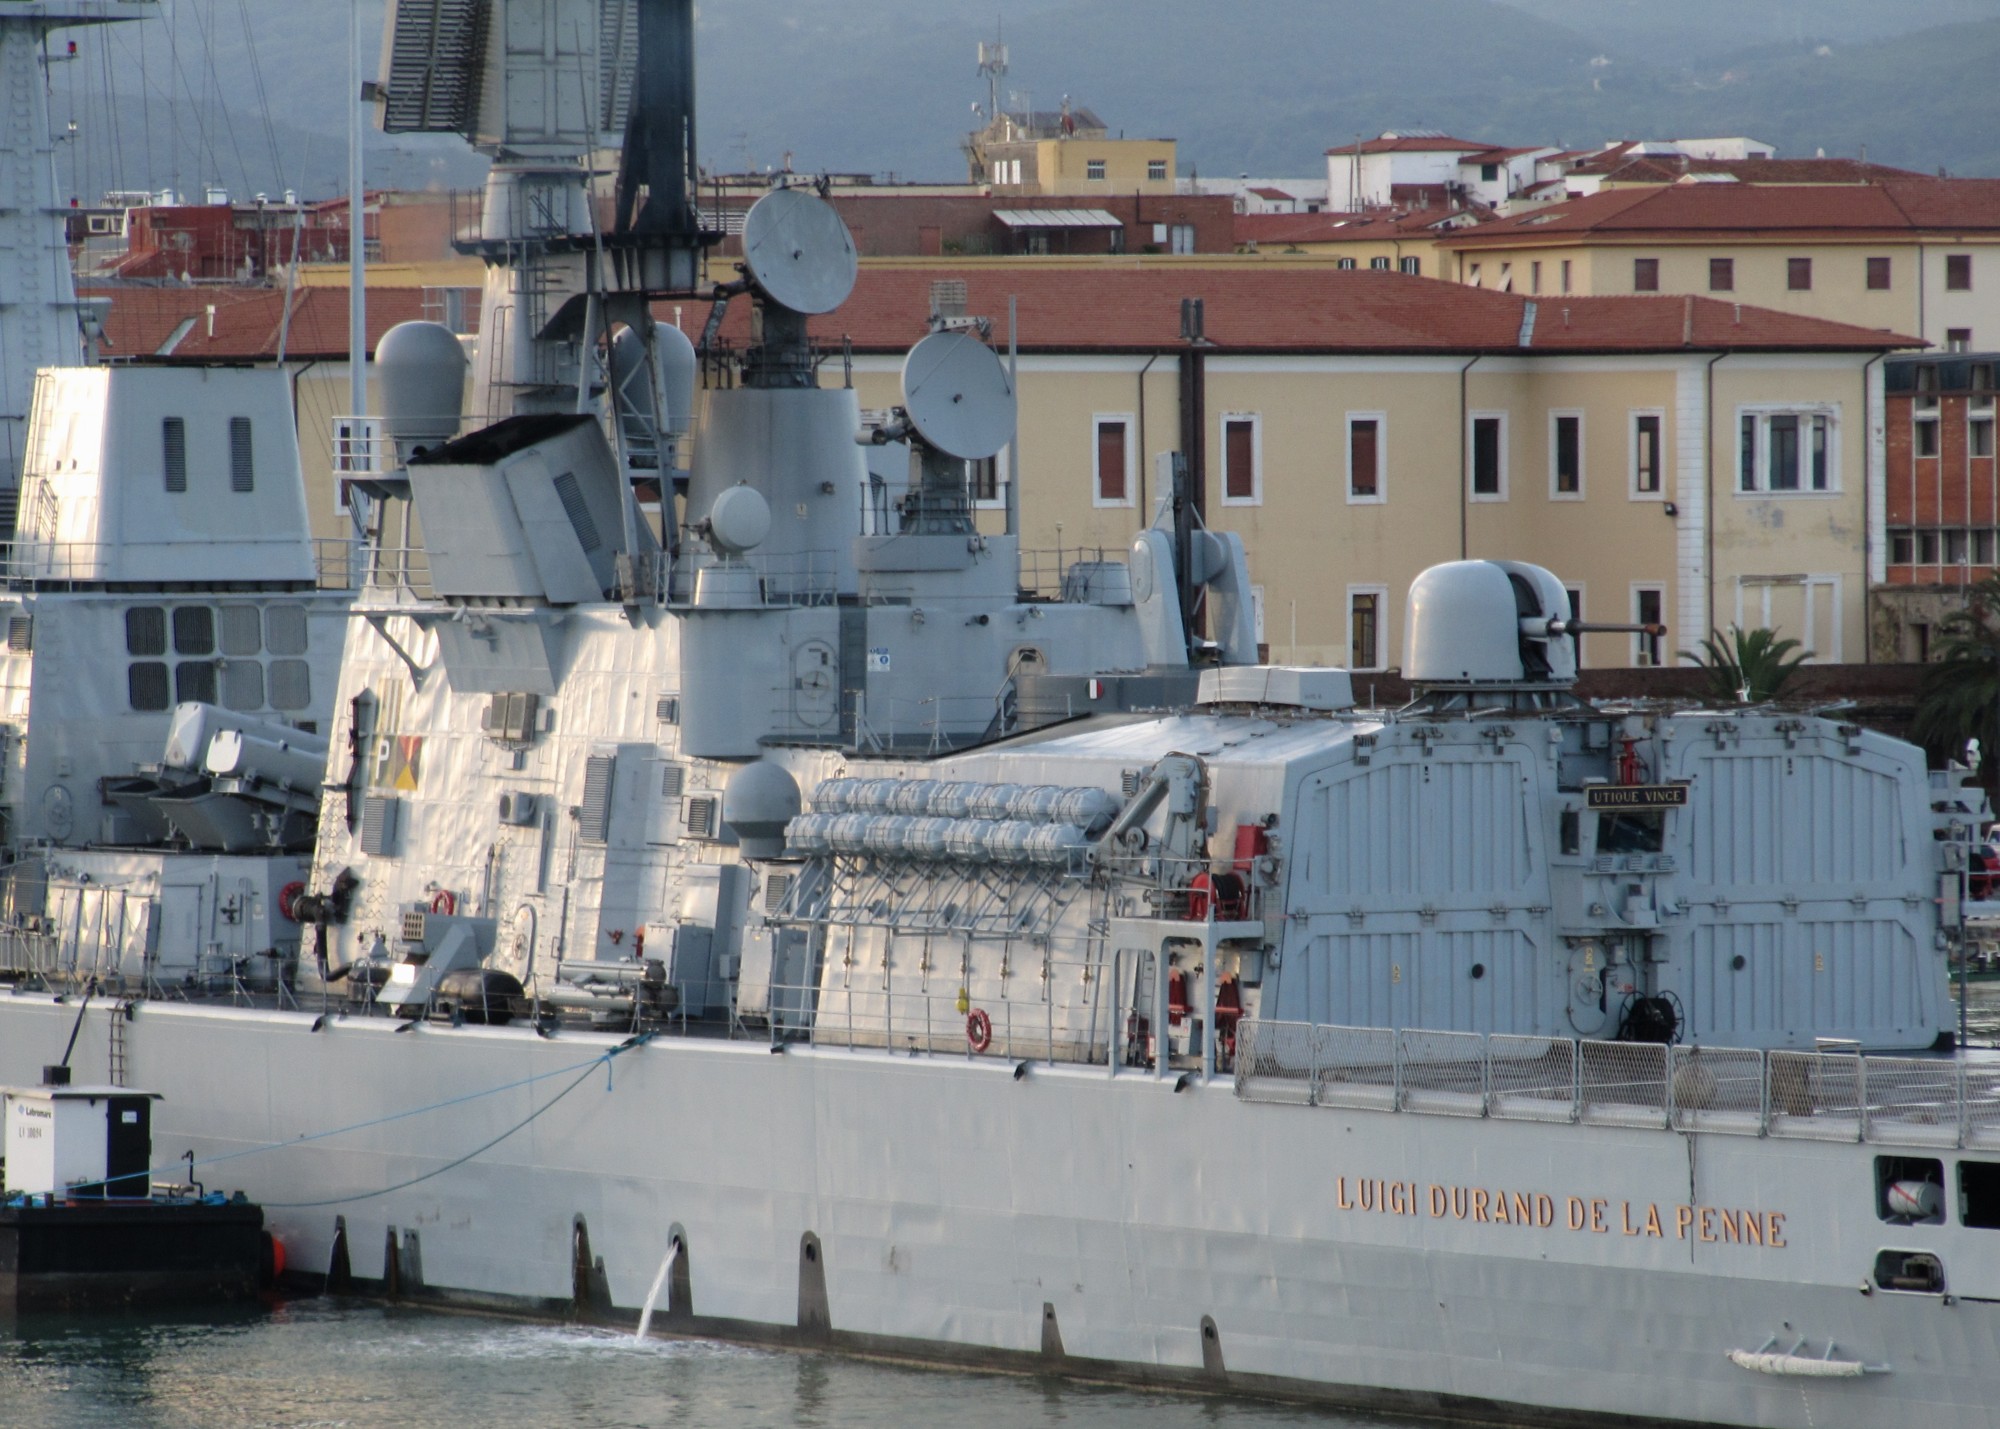 d-560 luigi durand de la penne its nave guided missile destroyer ddg italian navy marina militare 66 la spezia